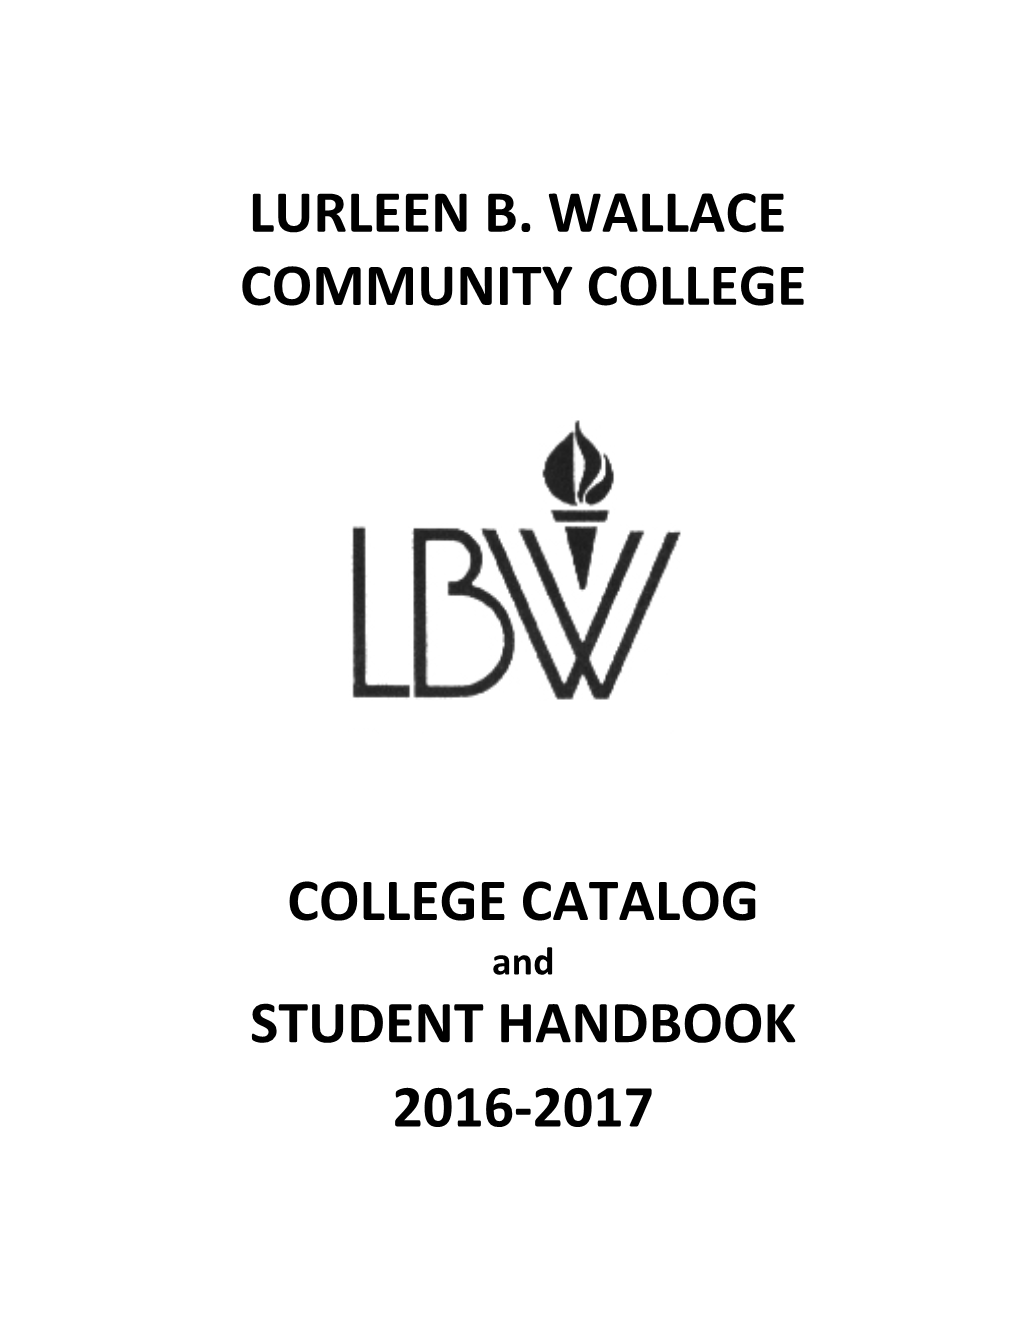 Lurleen B. Wallace Community College College Catalog Student Handbook 2016-2017